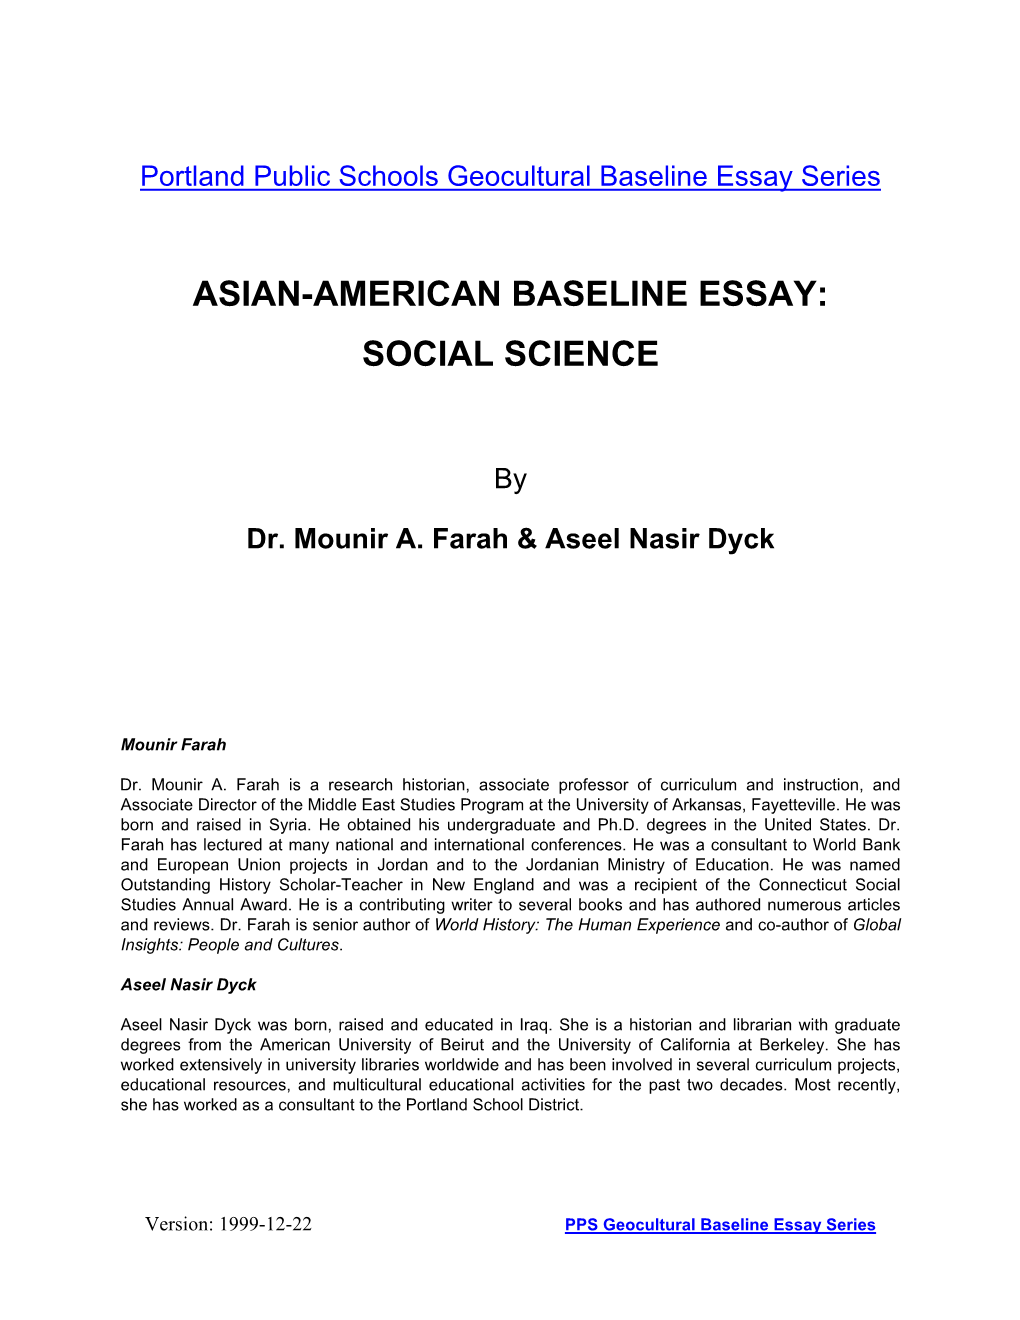 Asian-American Baseline Essay: Social Science